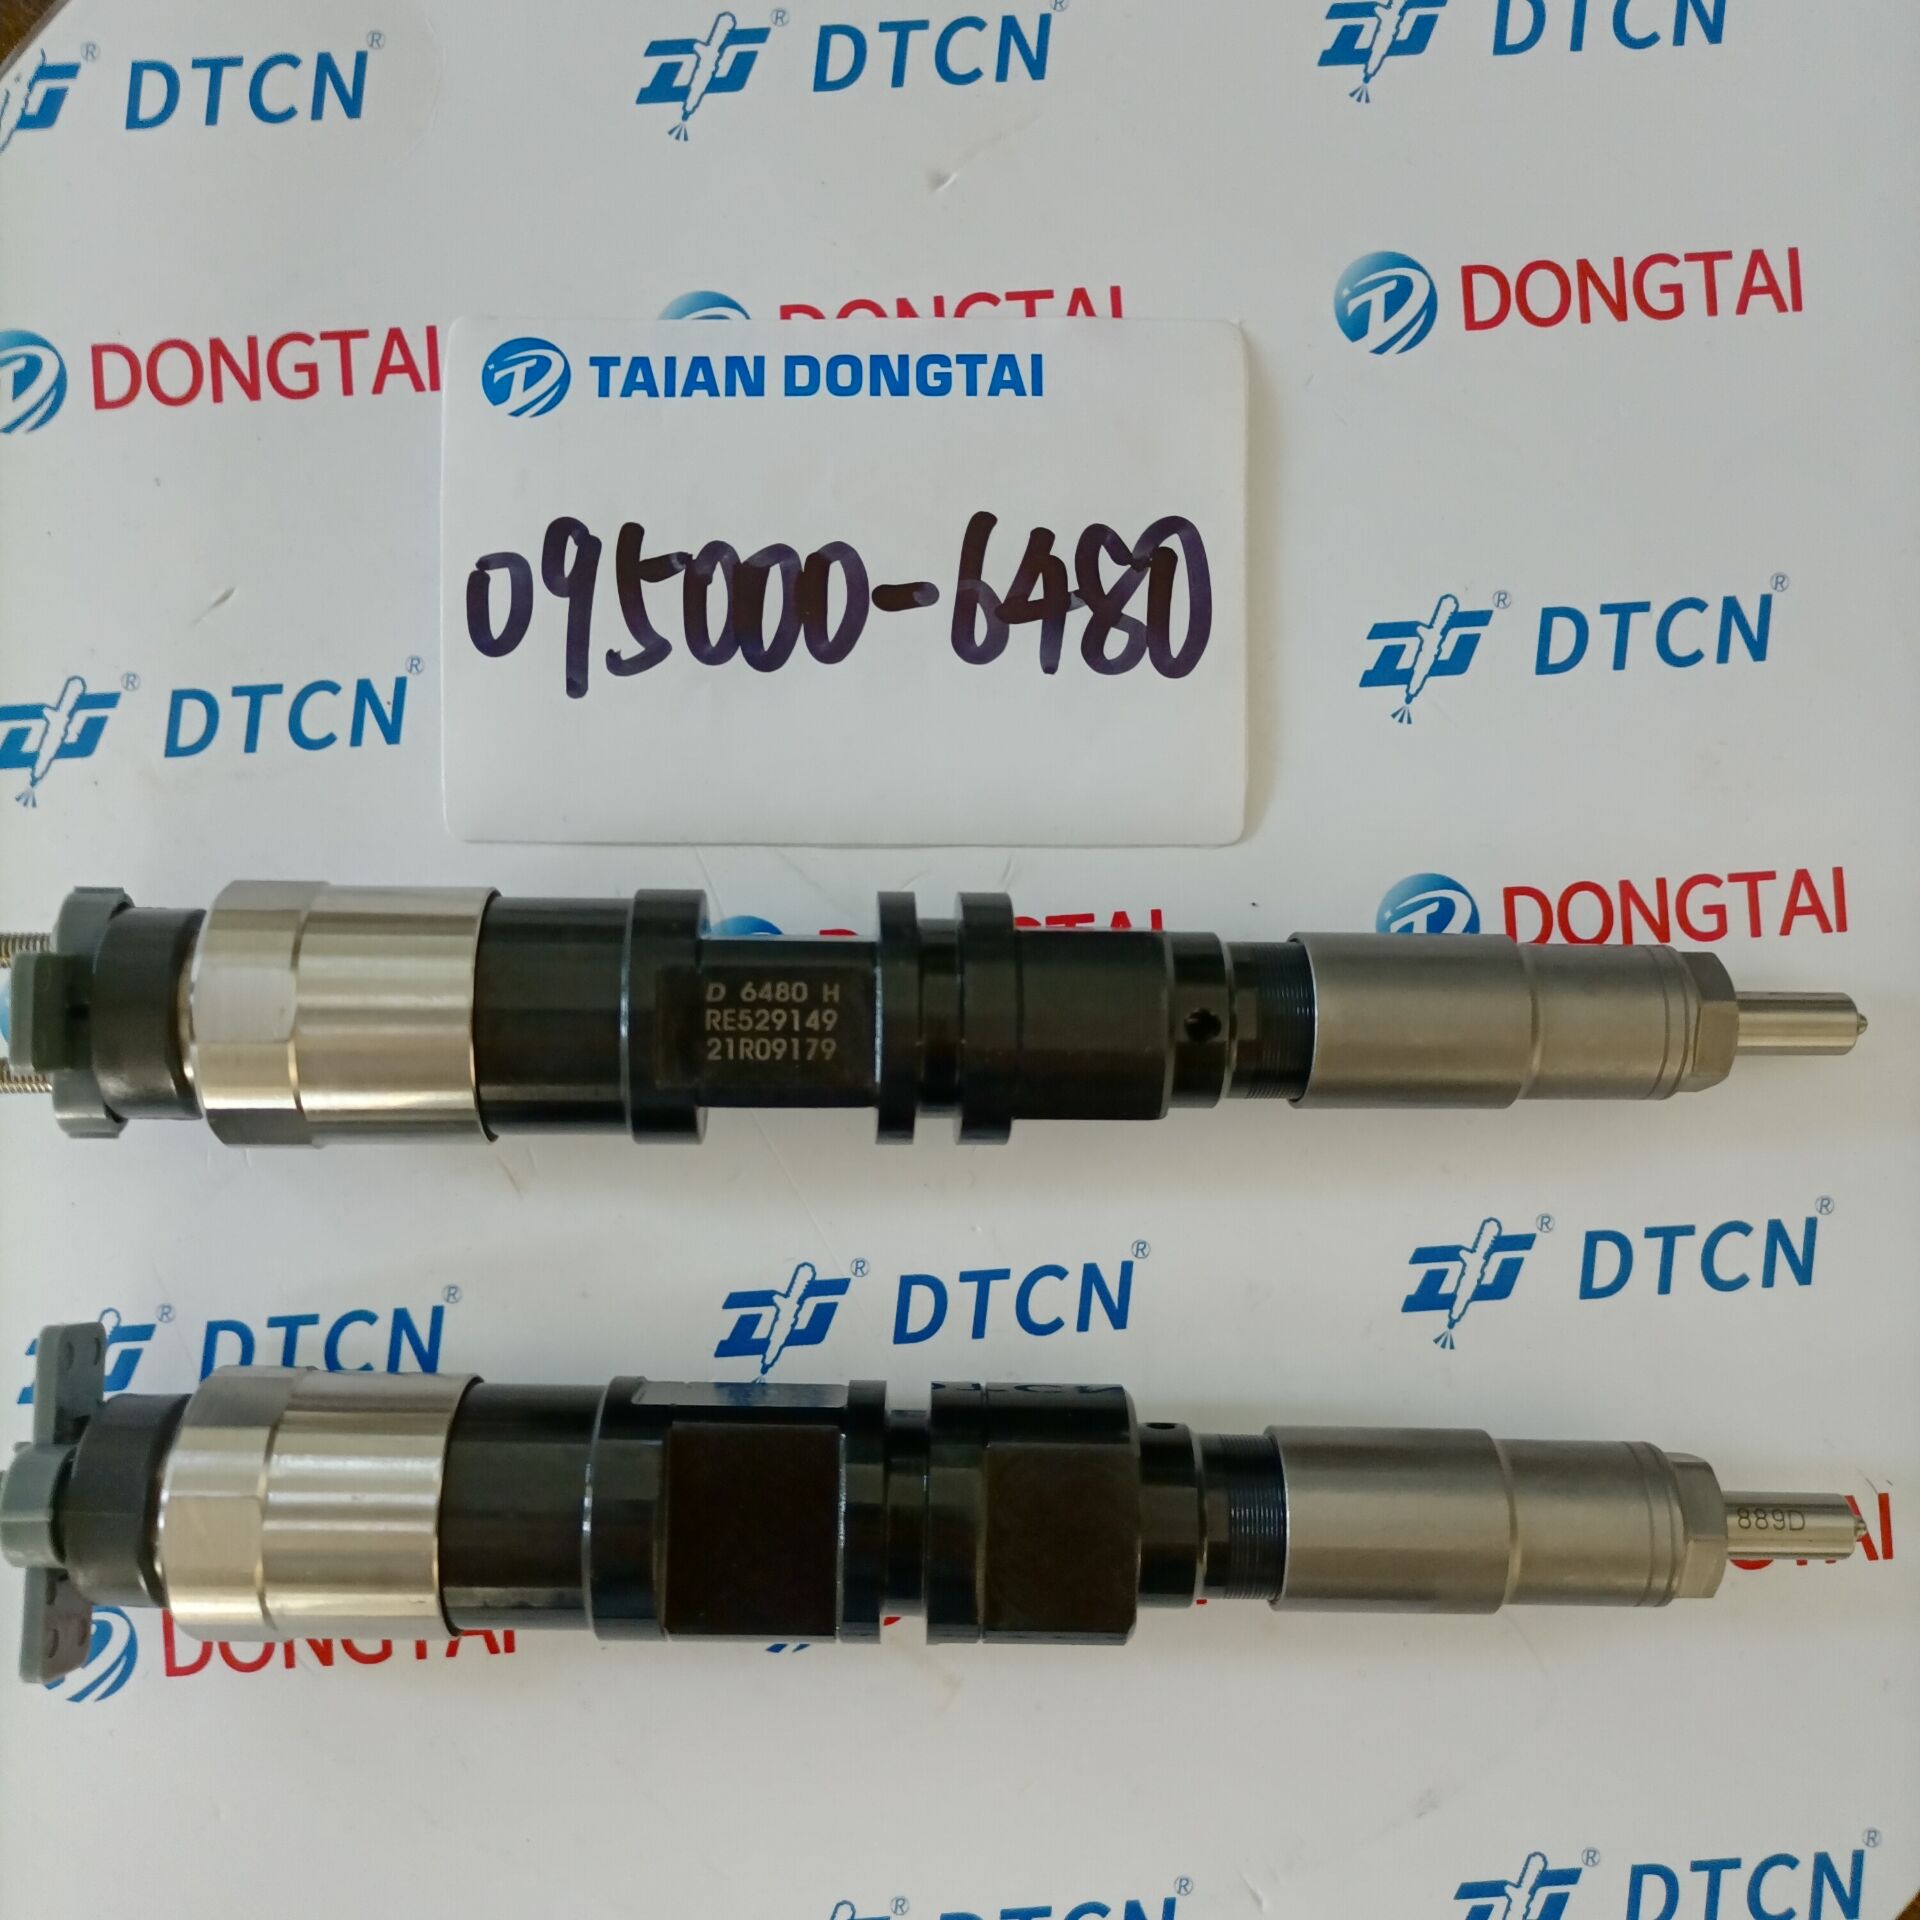 High definition Heui Oil Pump Shaft - Denso Common Rail Injector 095000-6480  for JOHN DEERE  – Dongtai